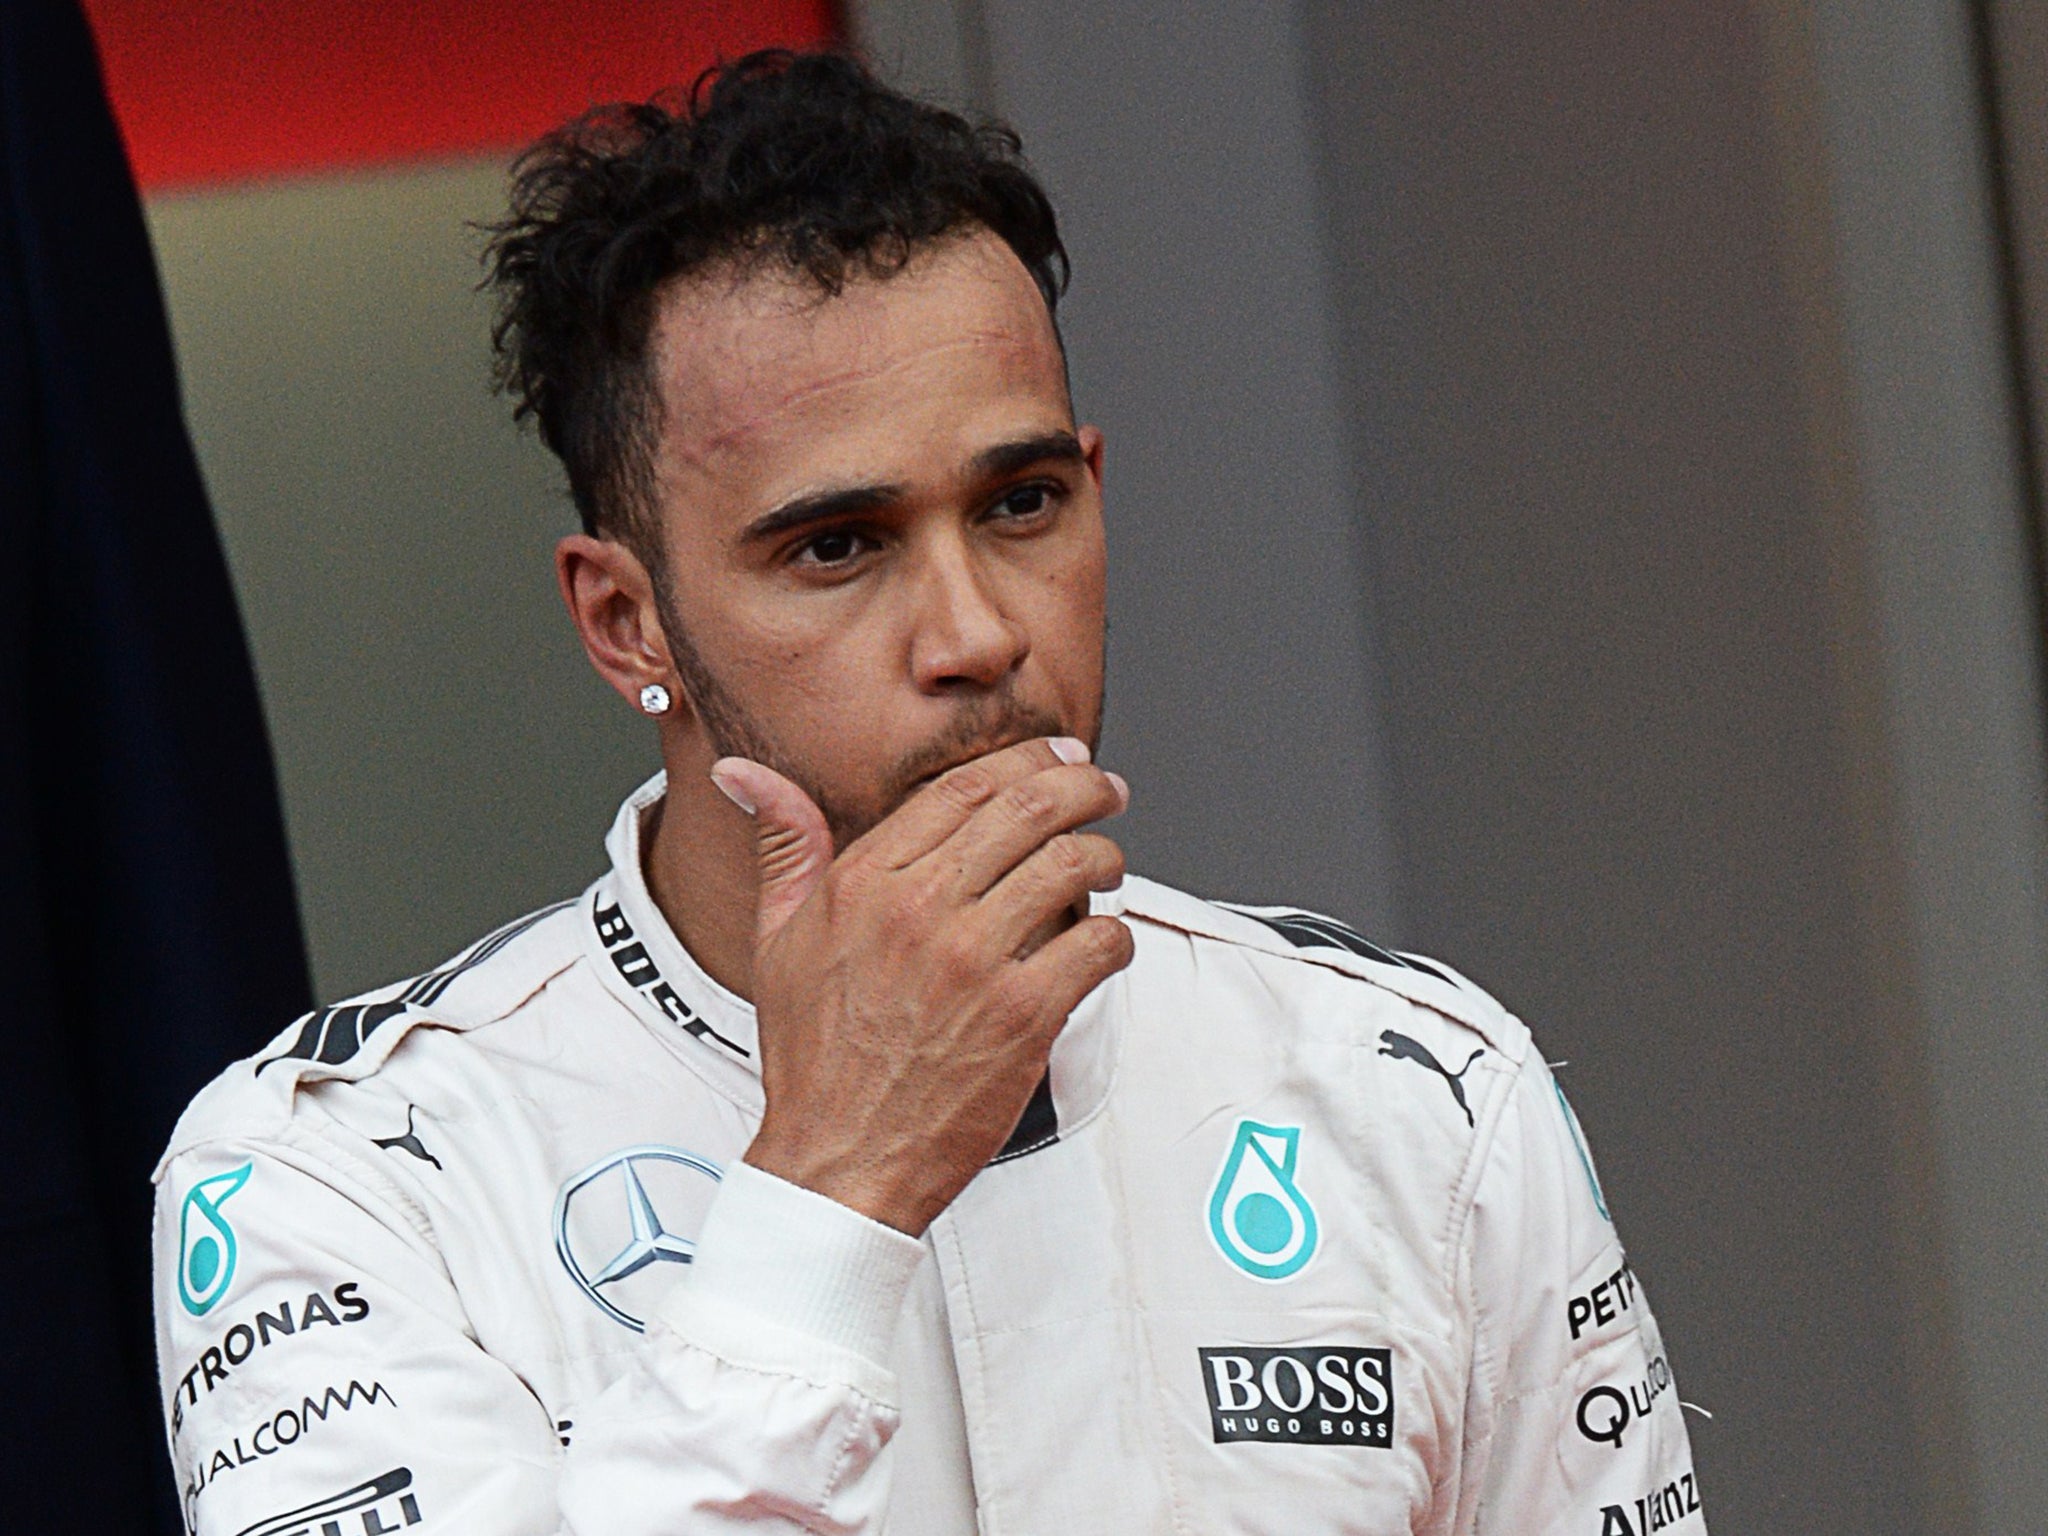 Lewis Hamilton reacts on the podium after the Monaco Grand Prix